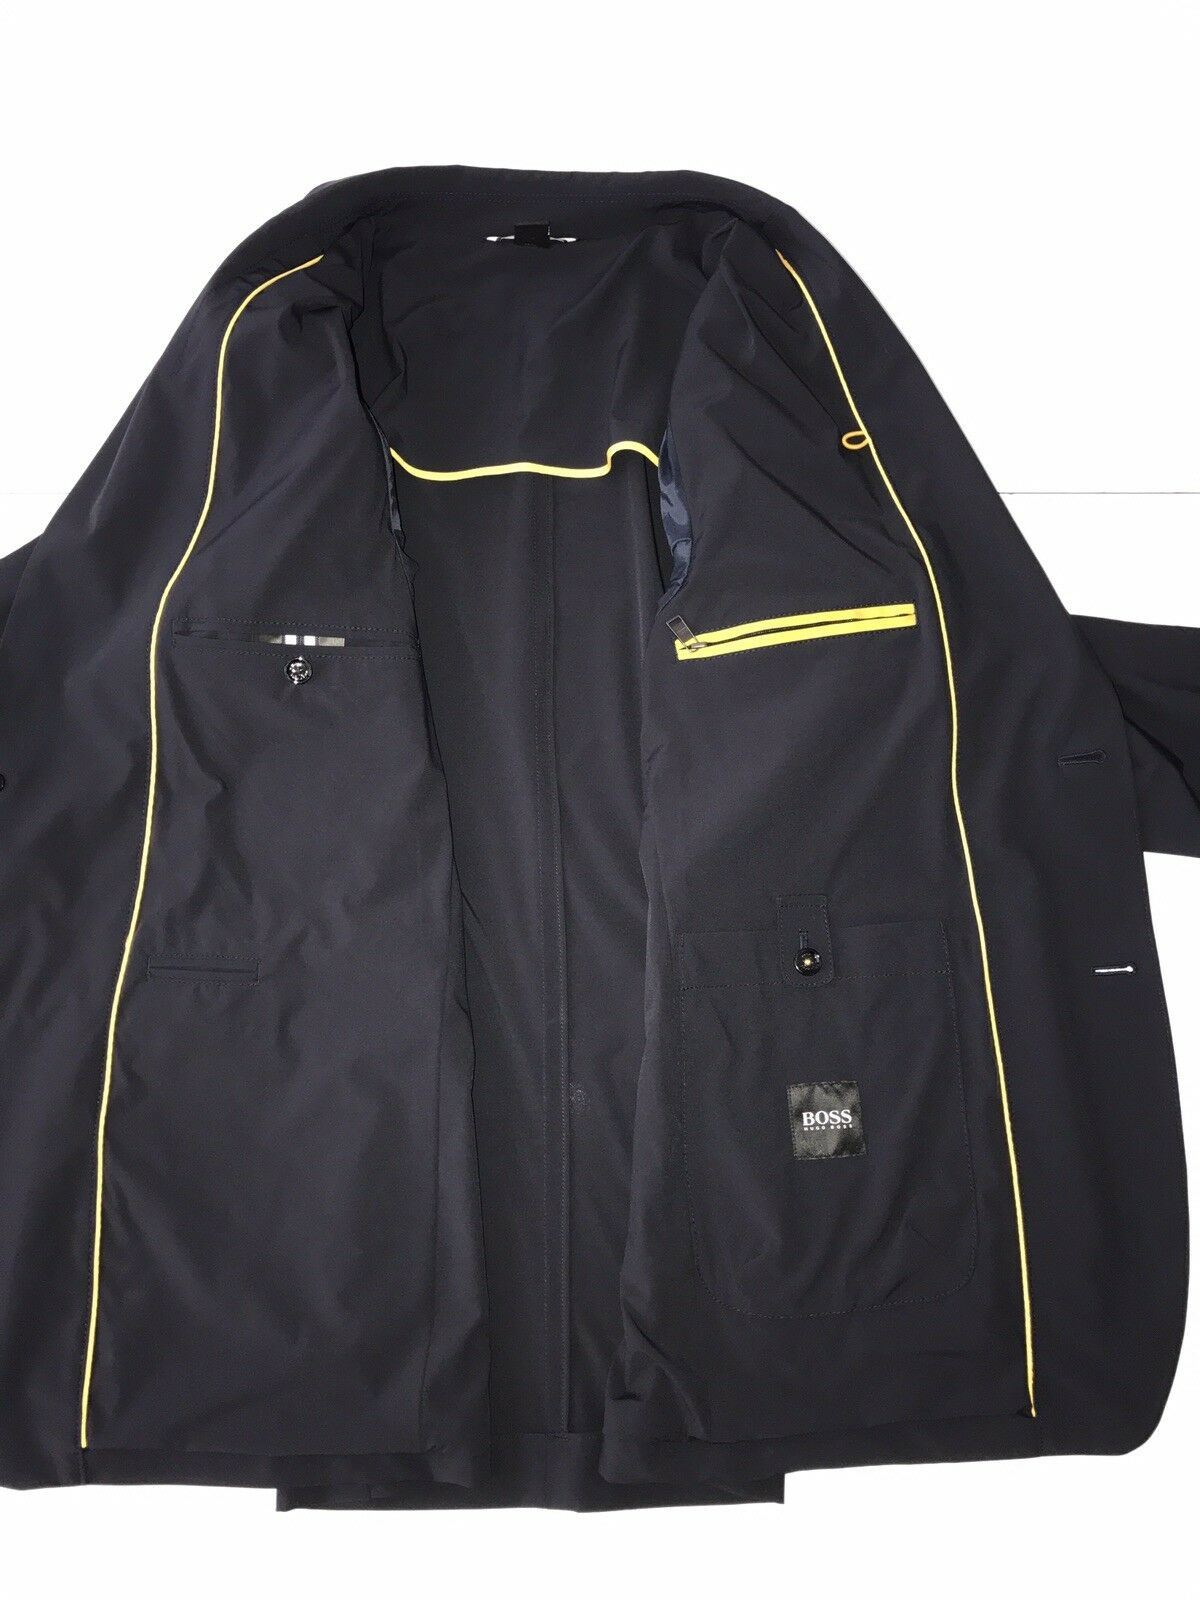 NWT $745 Boss Hugo Boss Neilton Stretch Water Repellent Men's Sport Coat 38R US